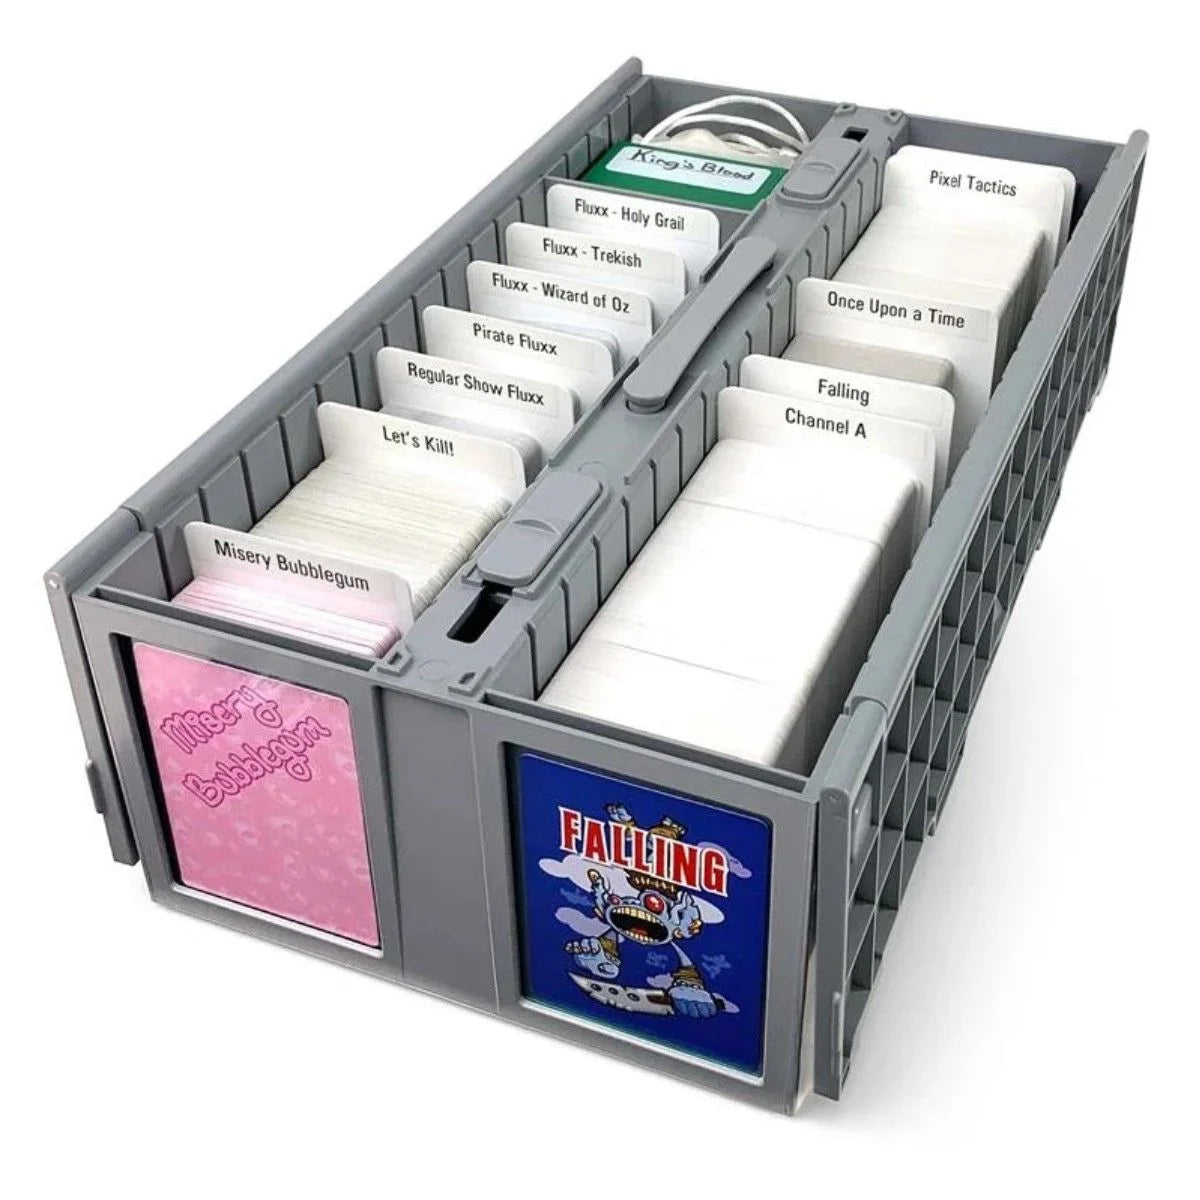 BCW Collectible Card Bin-1600-Grey-BCW Supplies-Ace Cards &amp; Collectibles